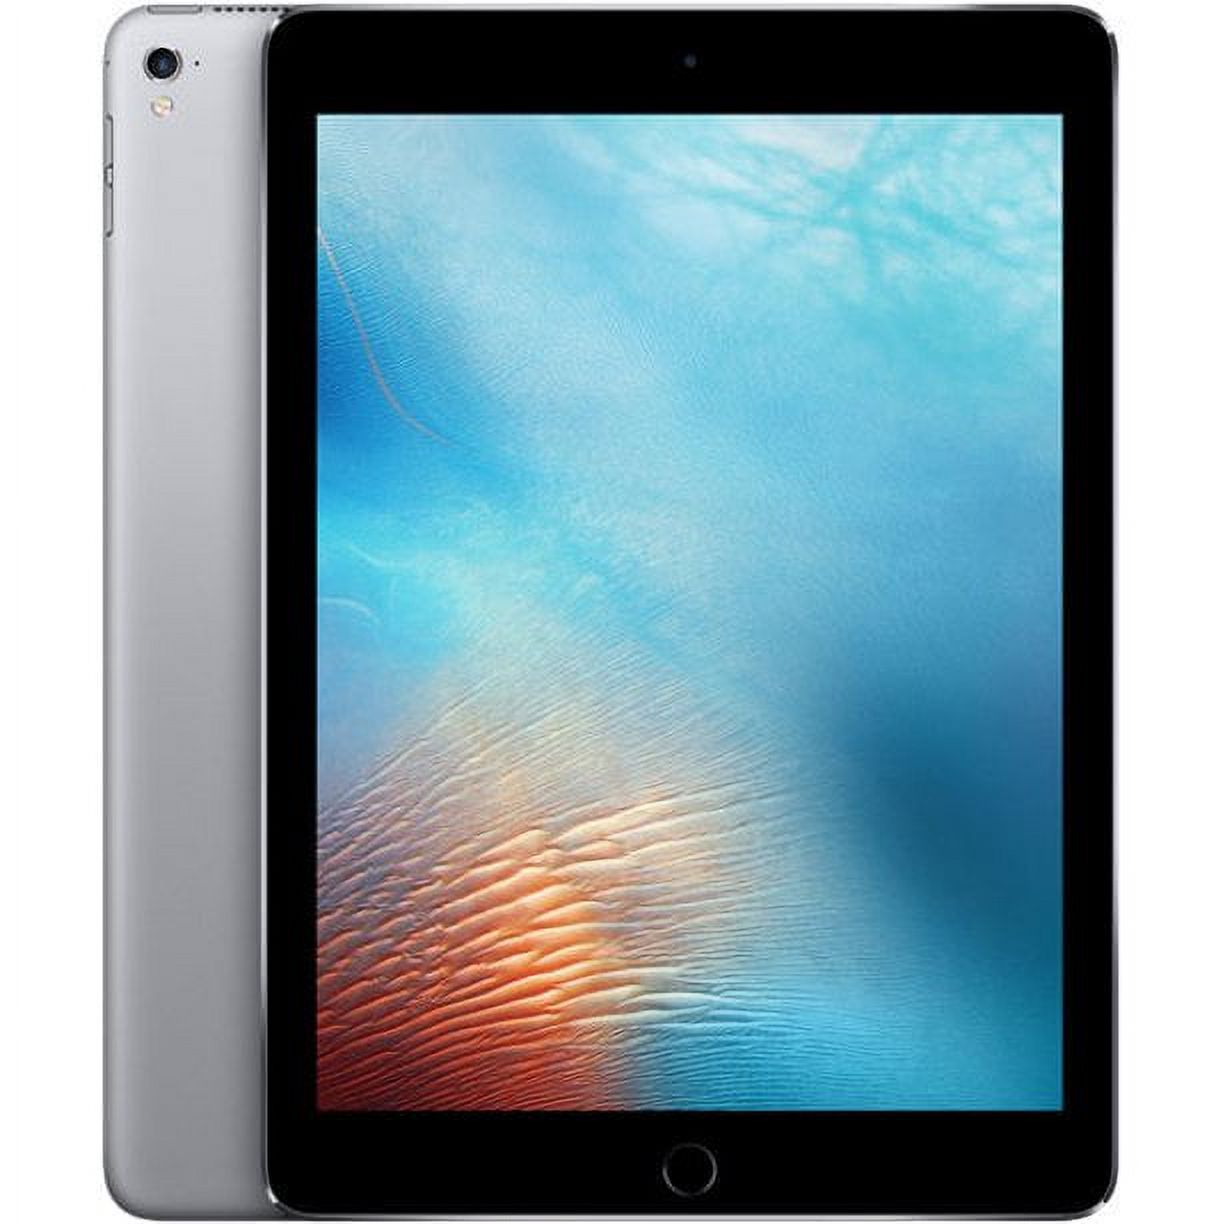 Apple iPad Pro 9.7 32GB Space Gray (WiFi) Used B+ - image 1 of 4